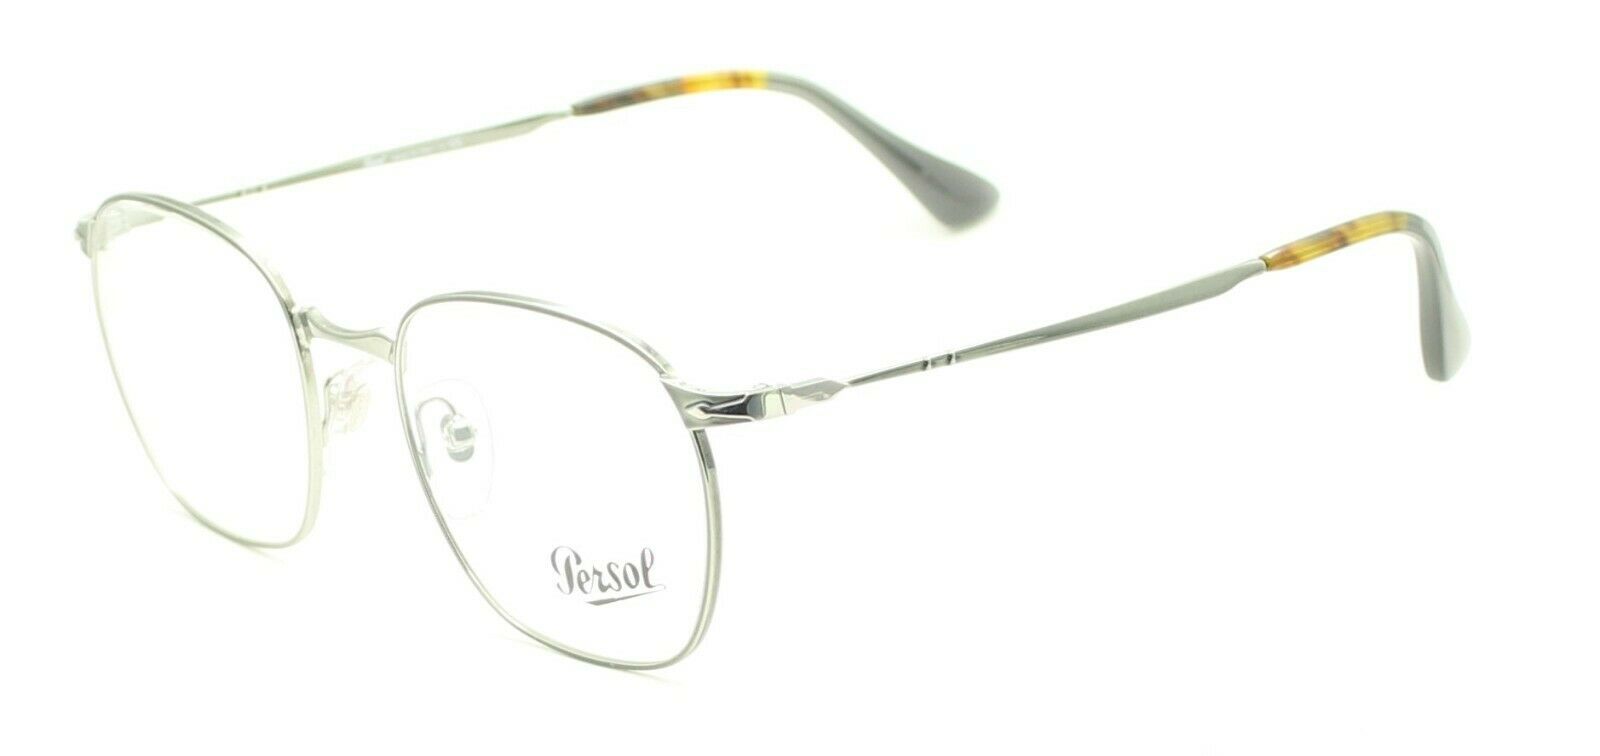 PERSOL 2450-V 1077 52mm Eyewear FRAMES Glasses RX Optical Eyeglasses New - Italy